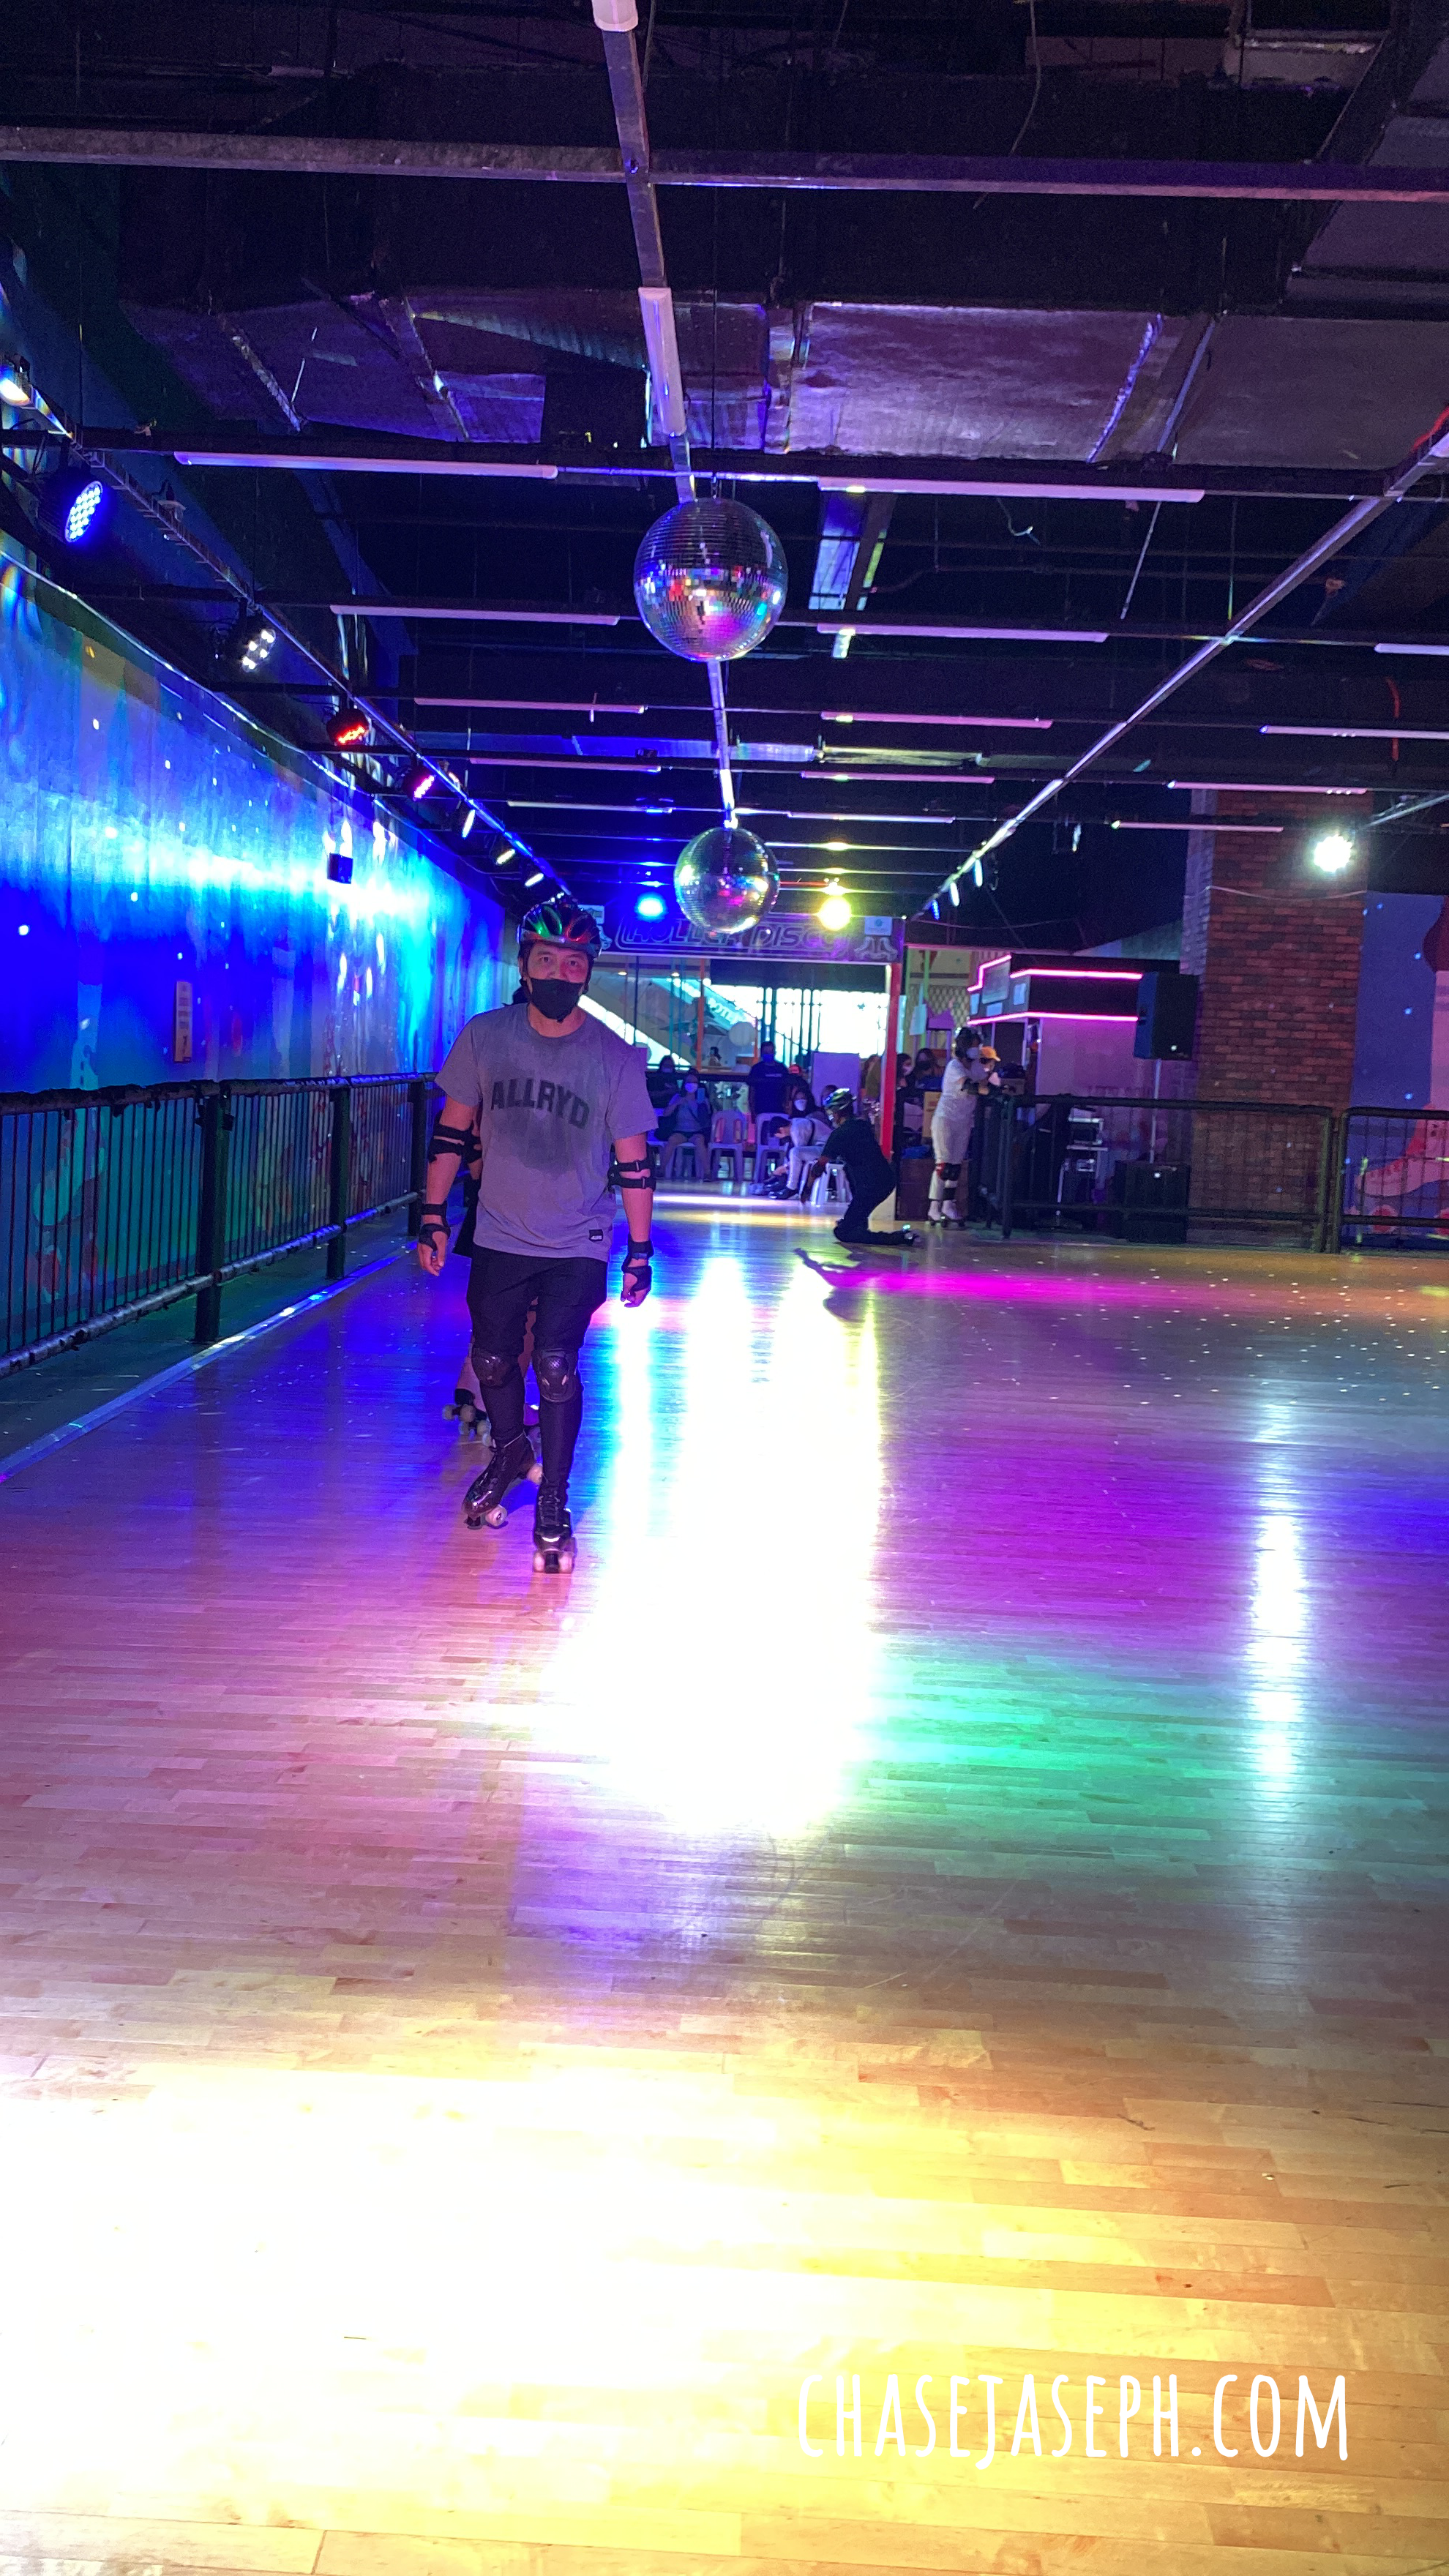 Roller Disco - Dance and Skate (Metro Guide)